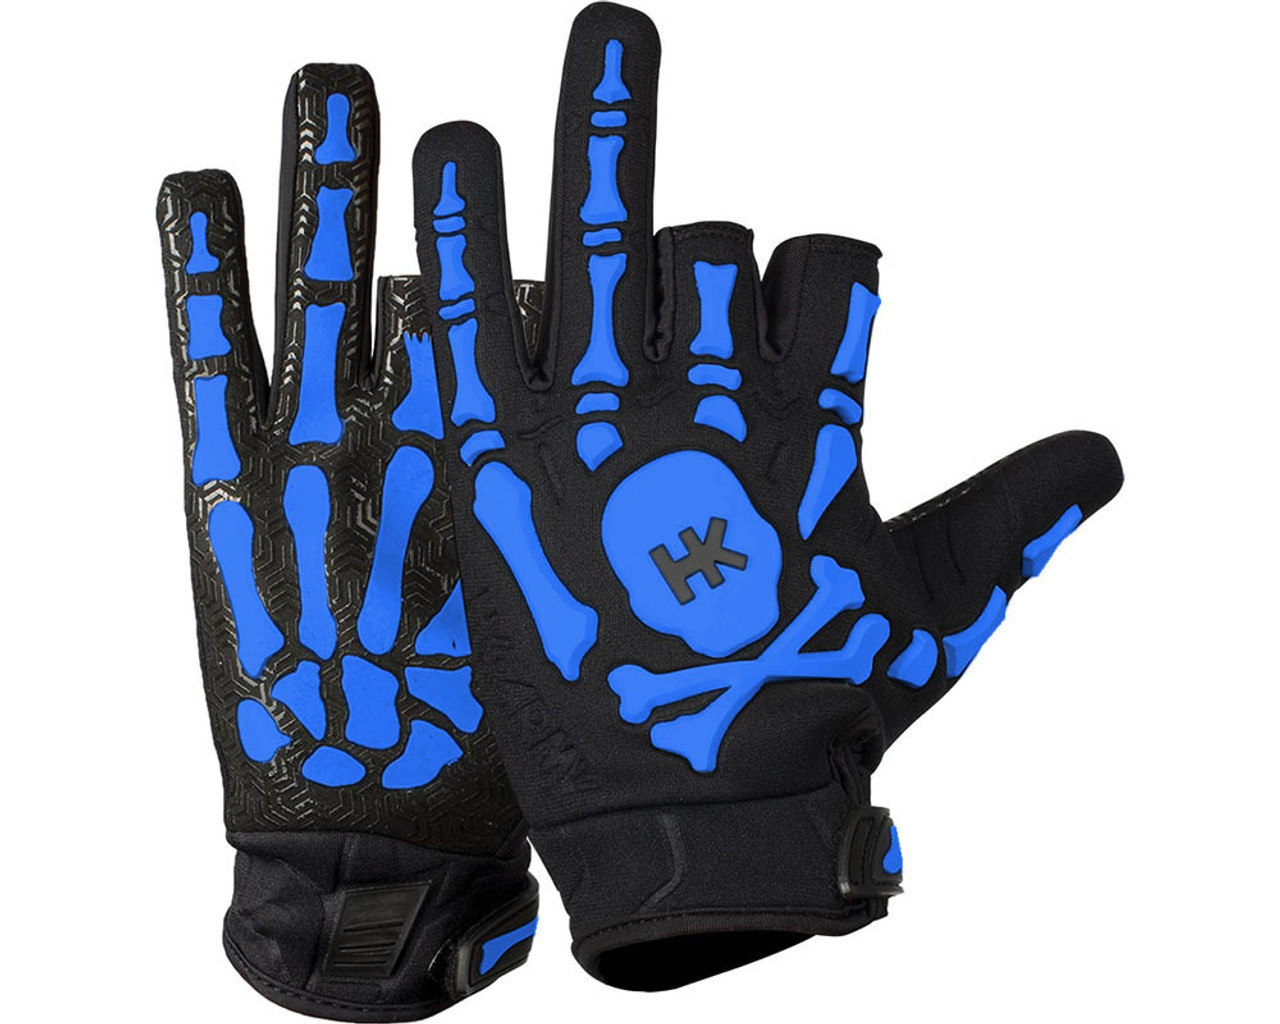 Exalt Death Grip Gloves - Black / Black